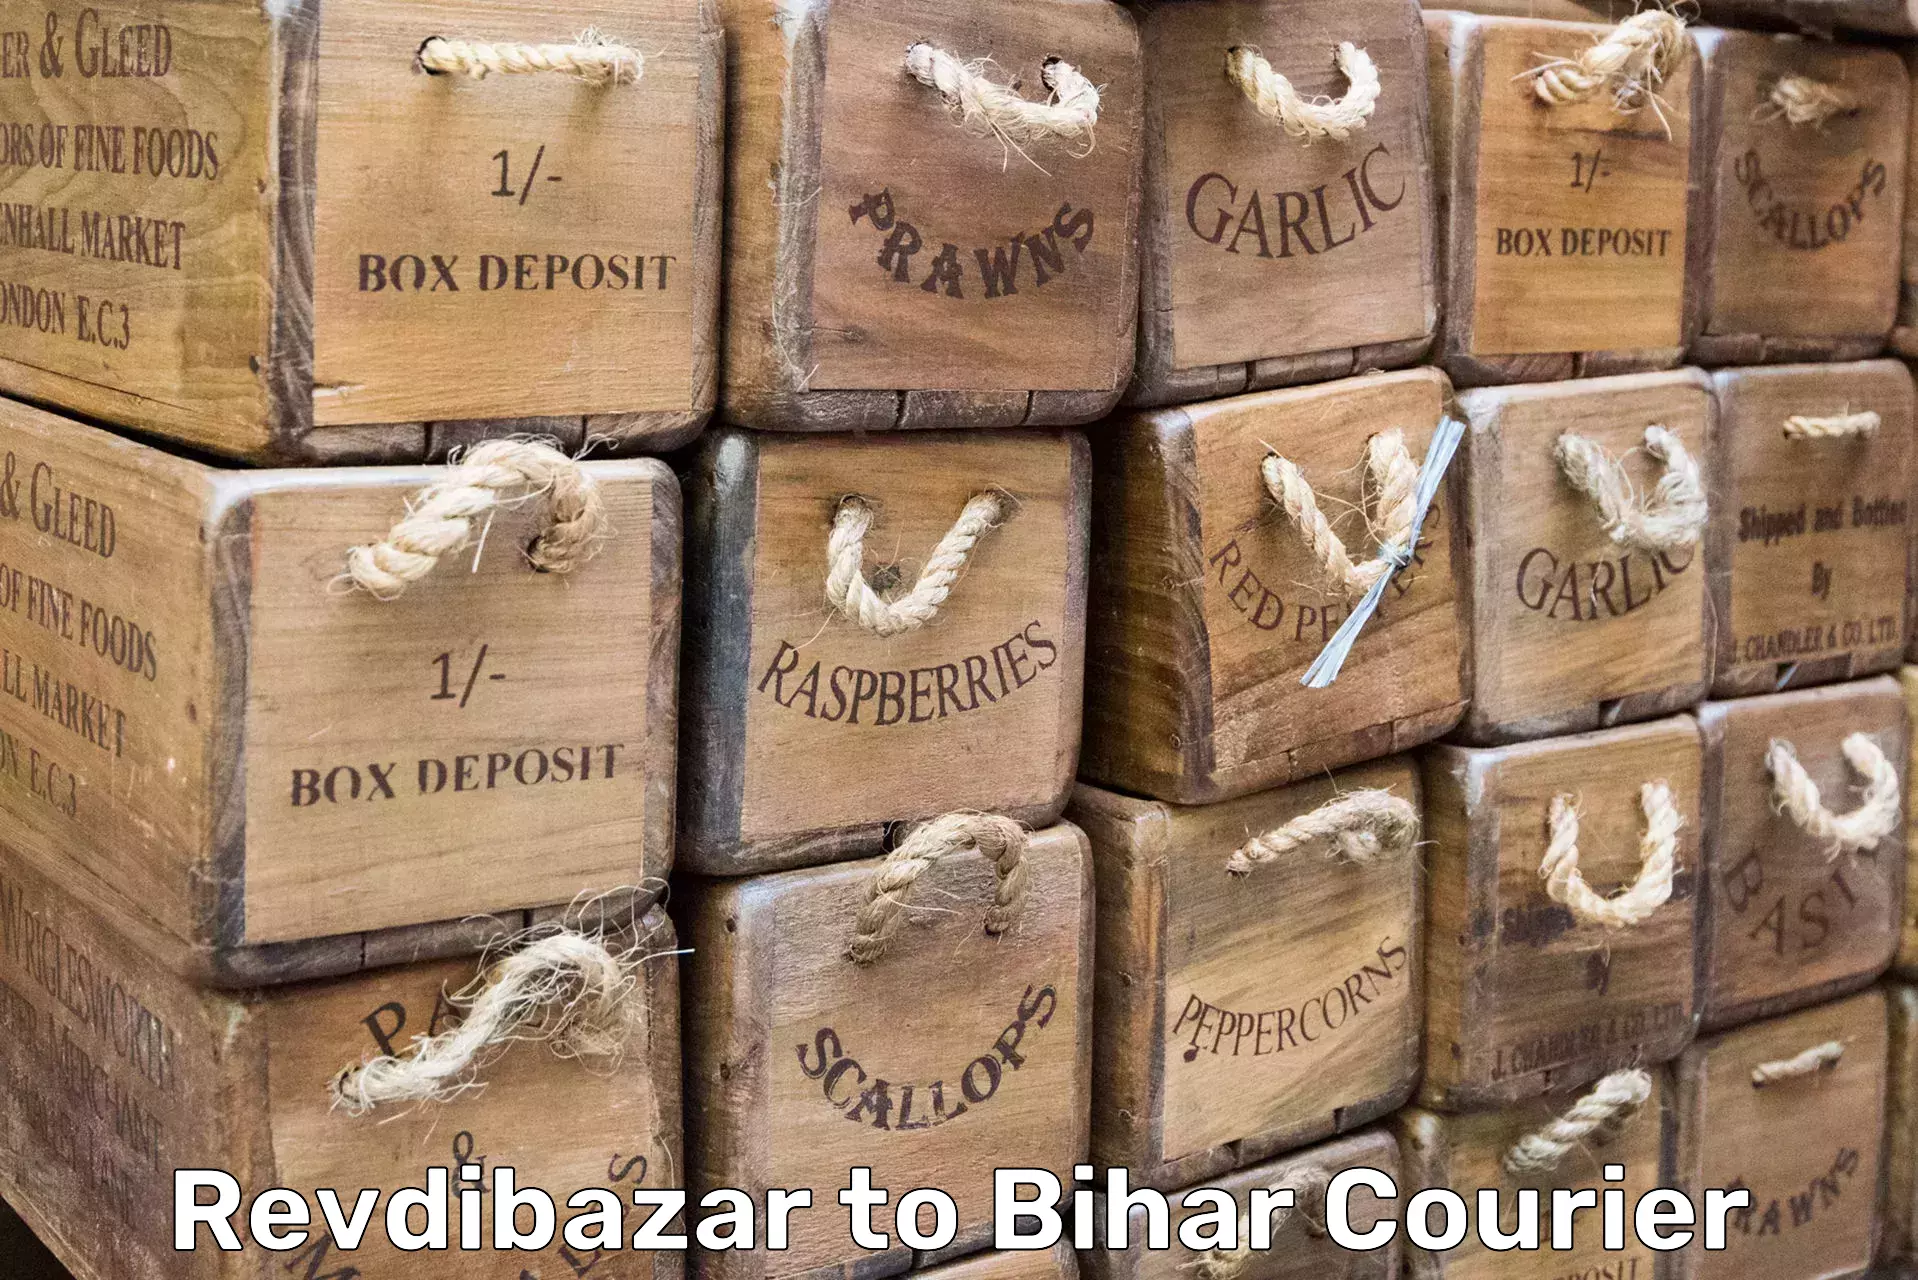 Professional moving company Revdibazar to Khizarsarai